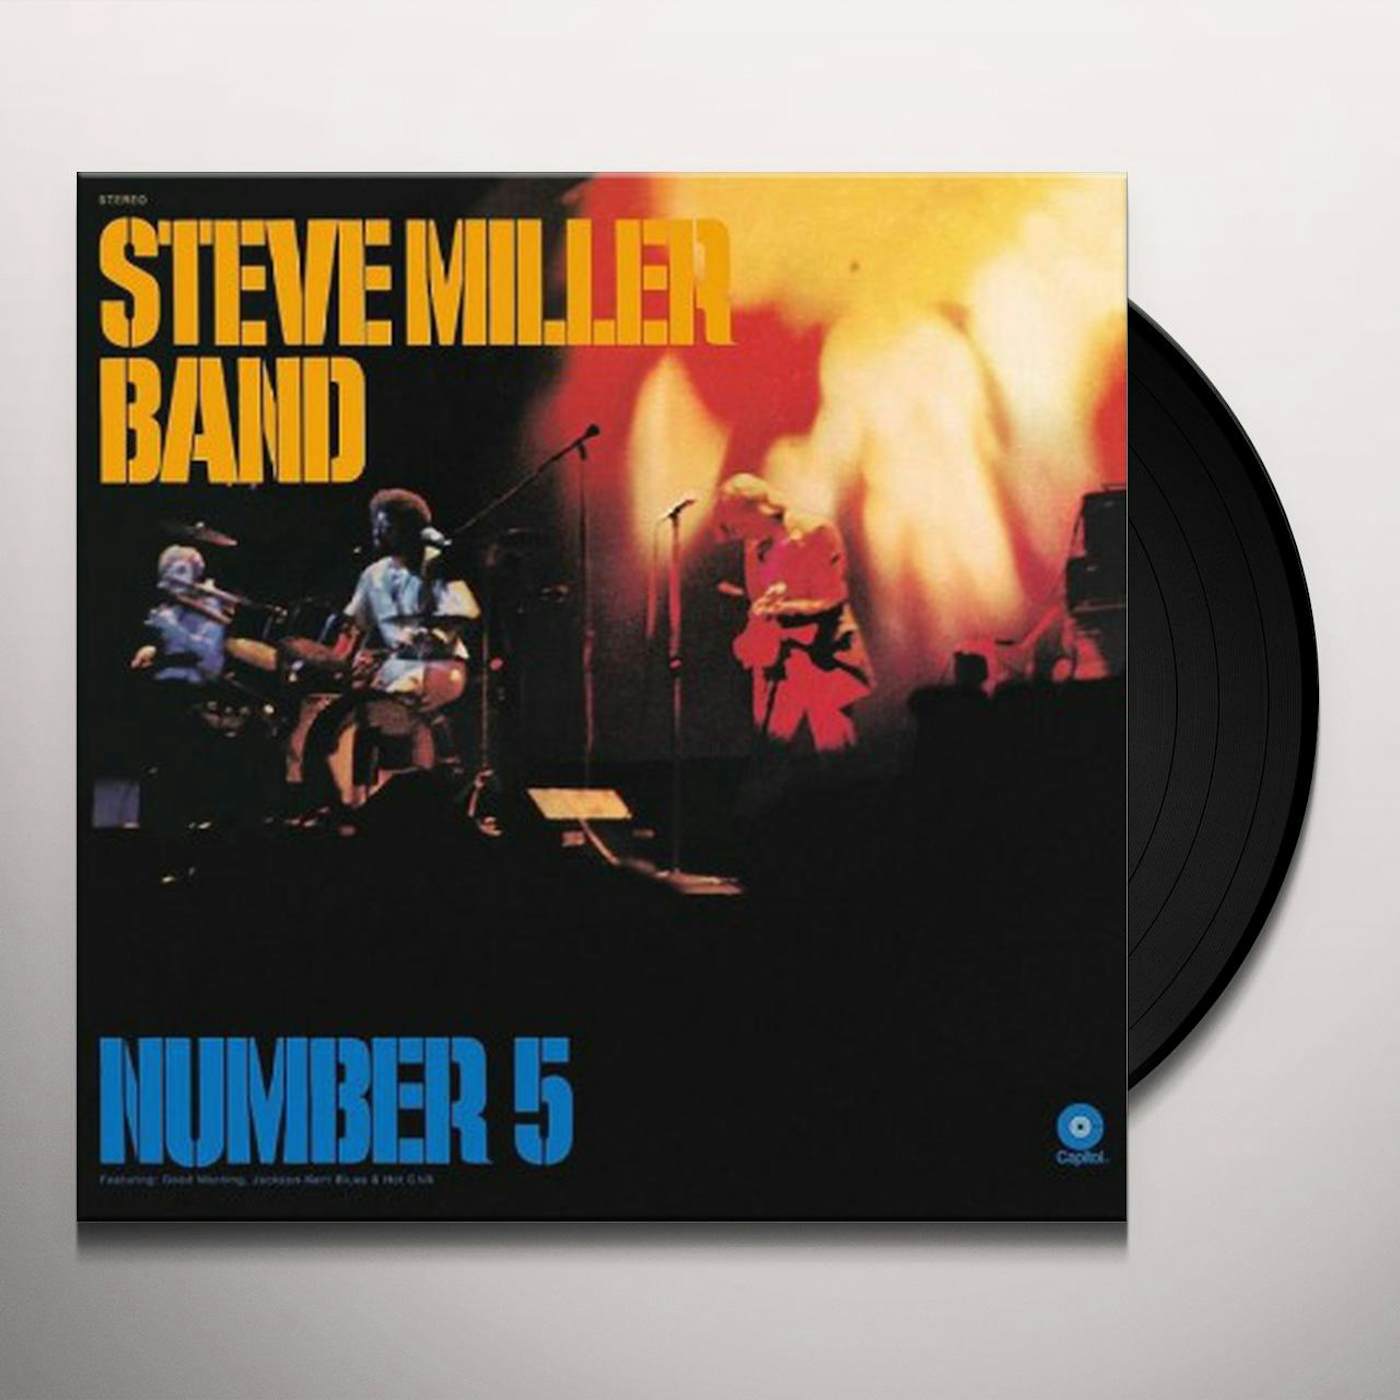 Steve Miller Band Number 5 Vinyl Record